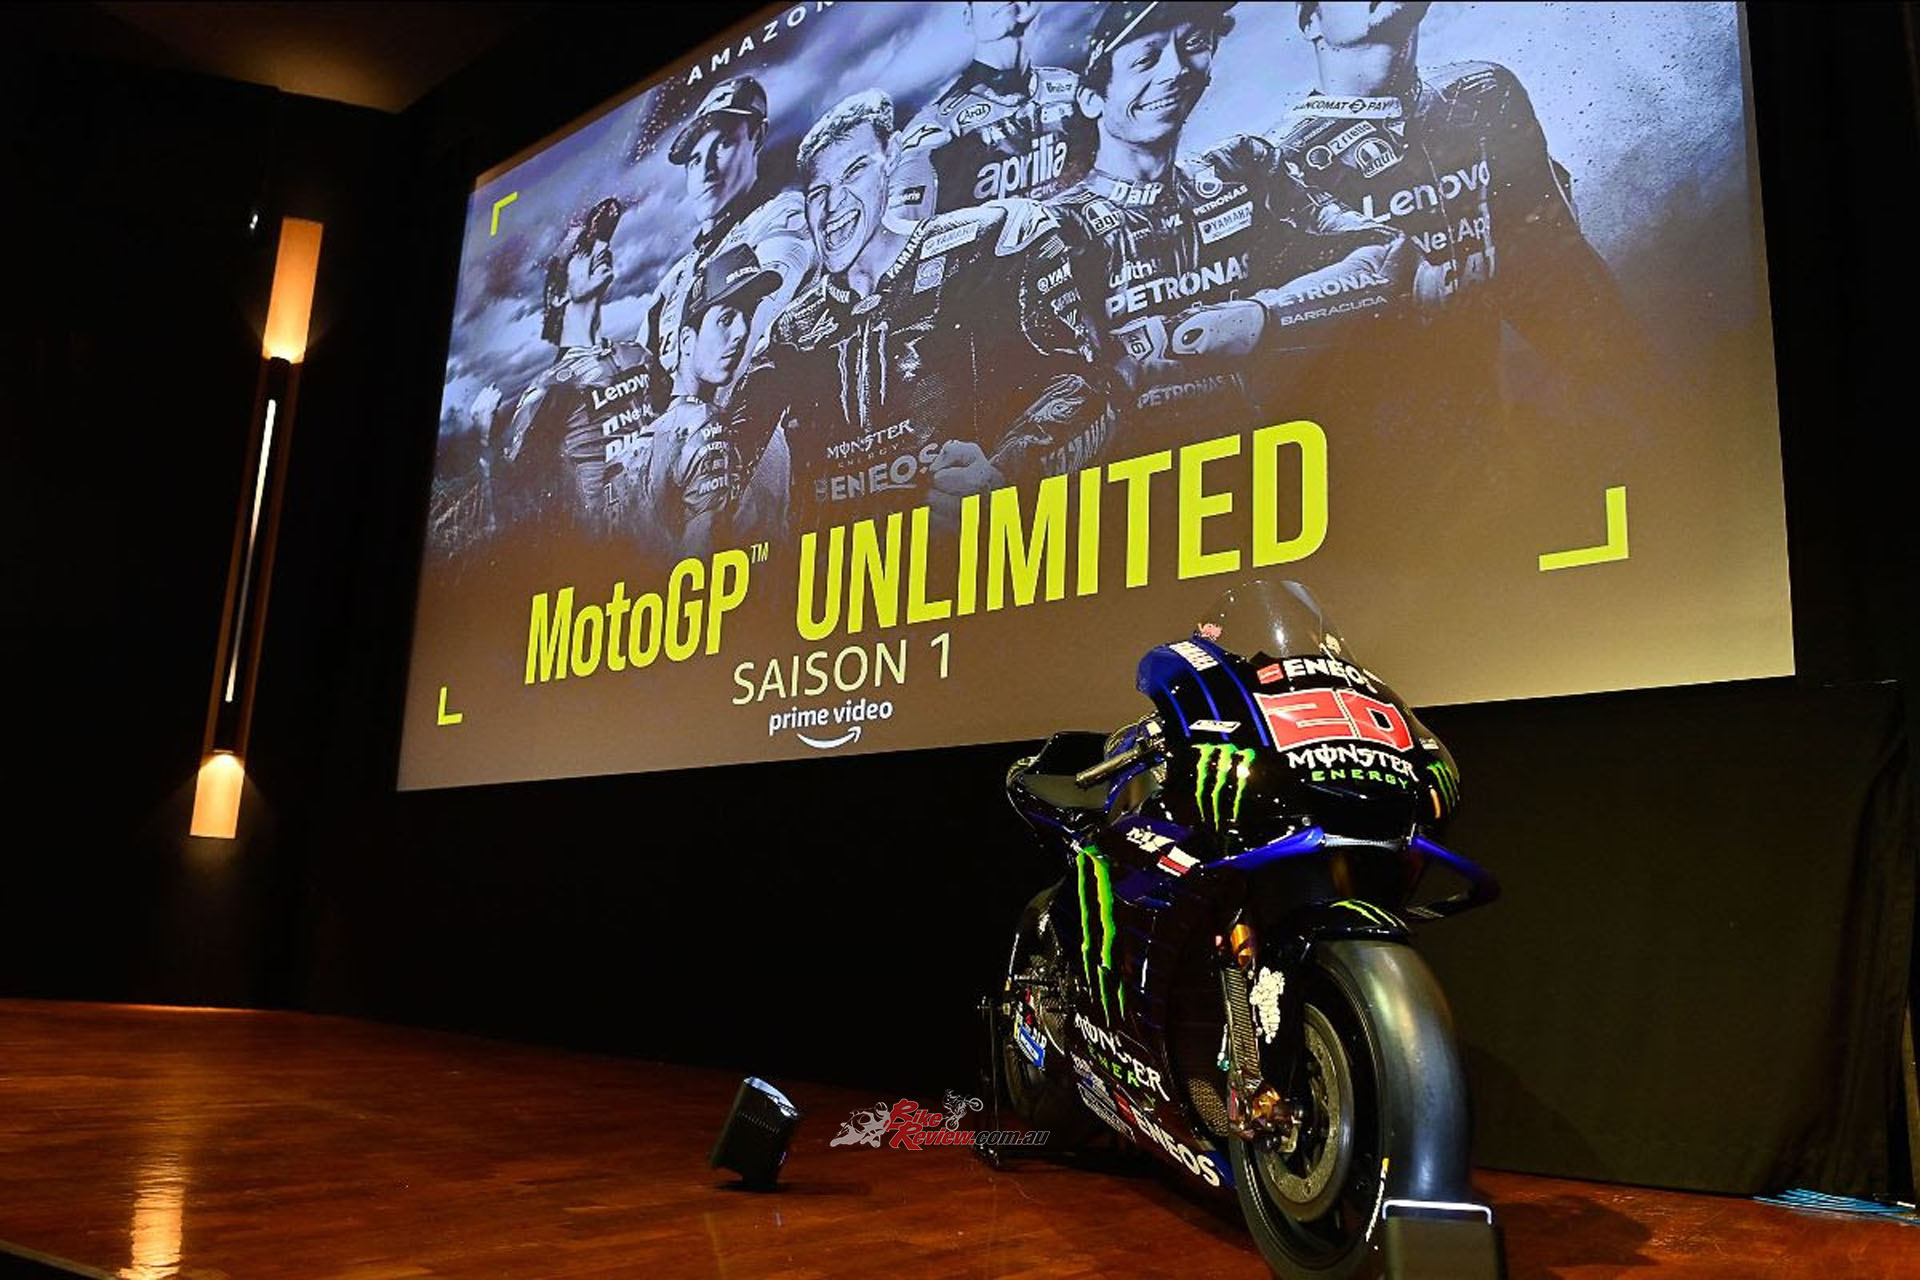 MotoGP Unlimited Docuseries Premieres In Paris